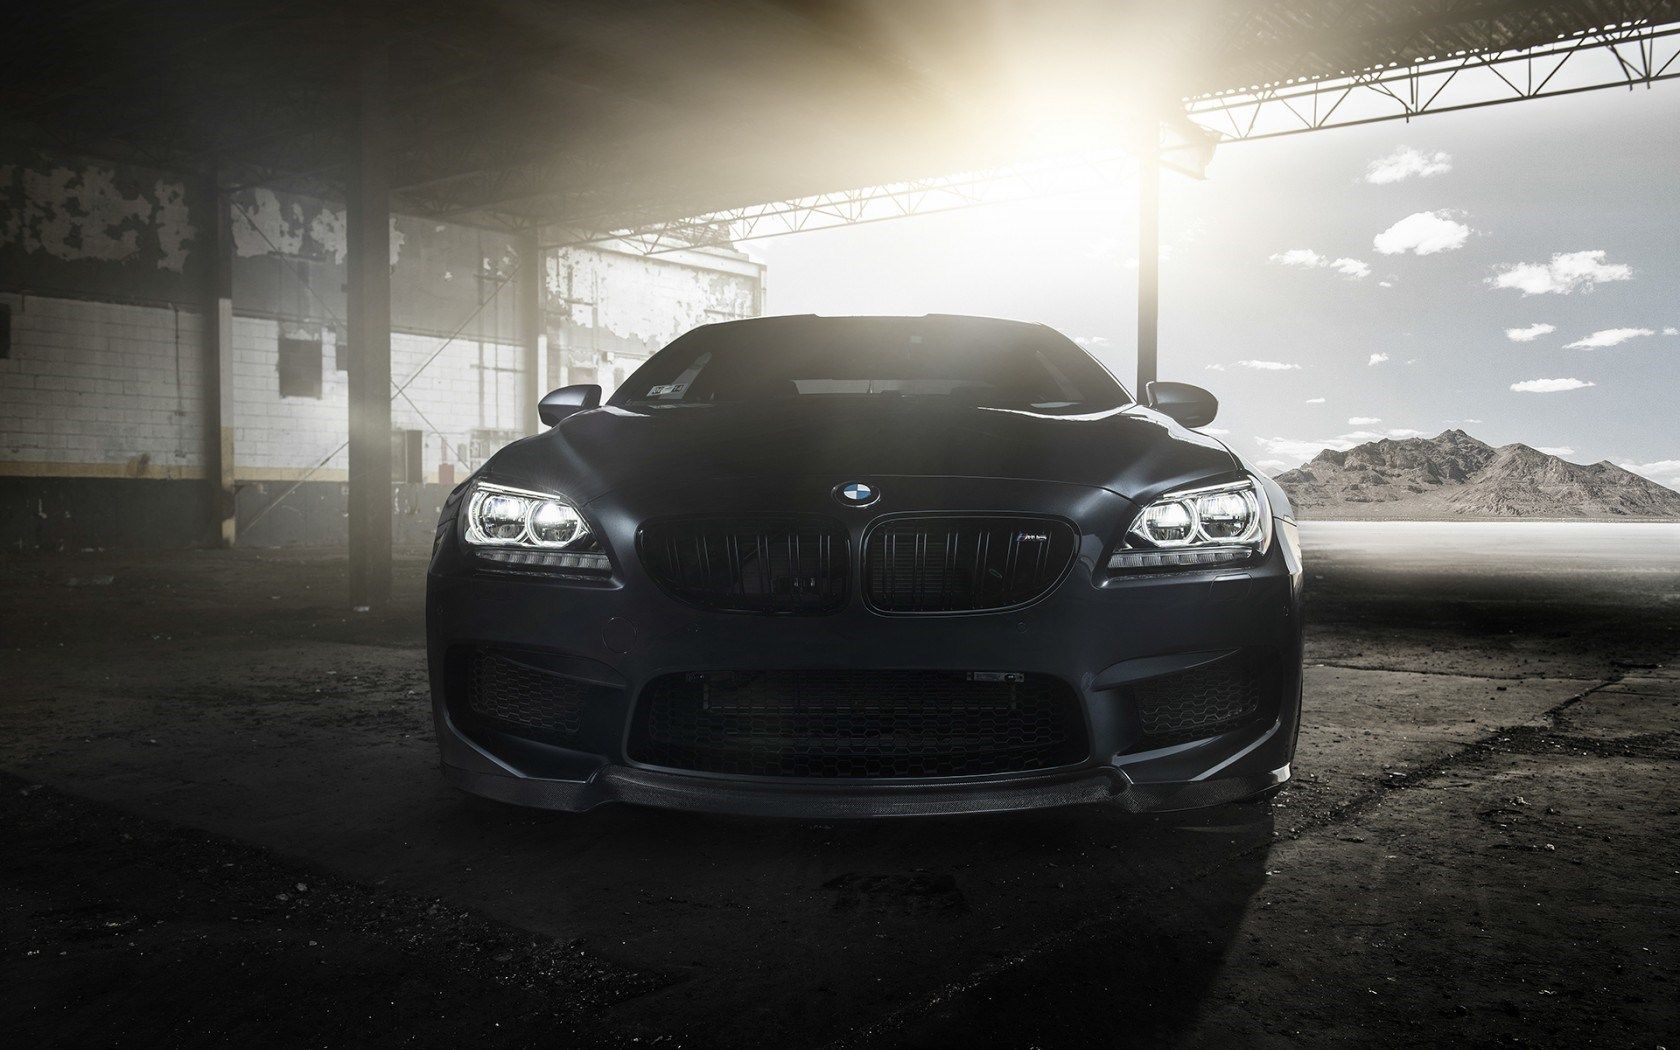 A black car parked in an empty garage - BMW